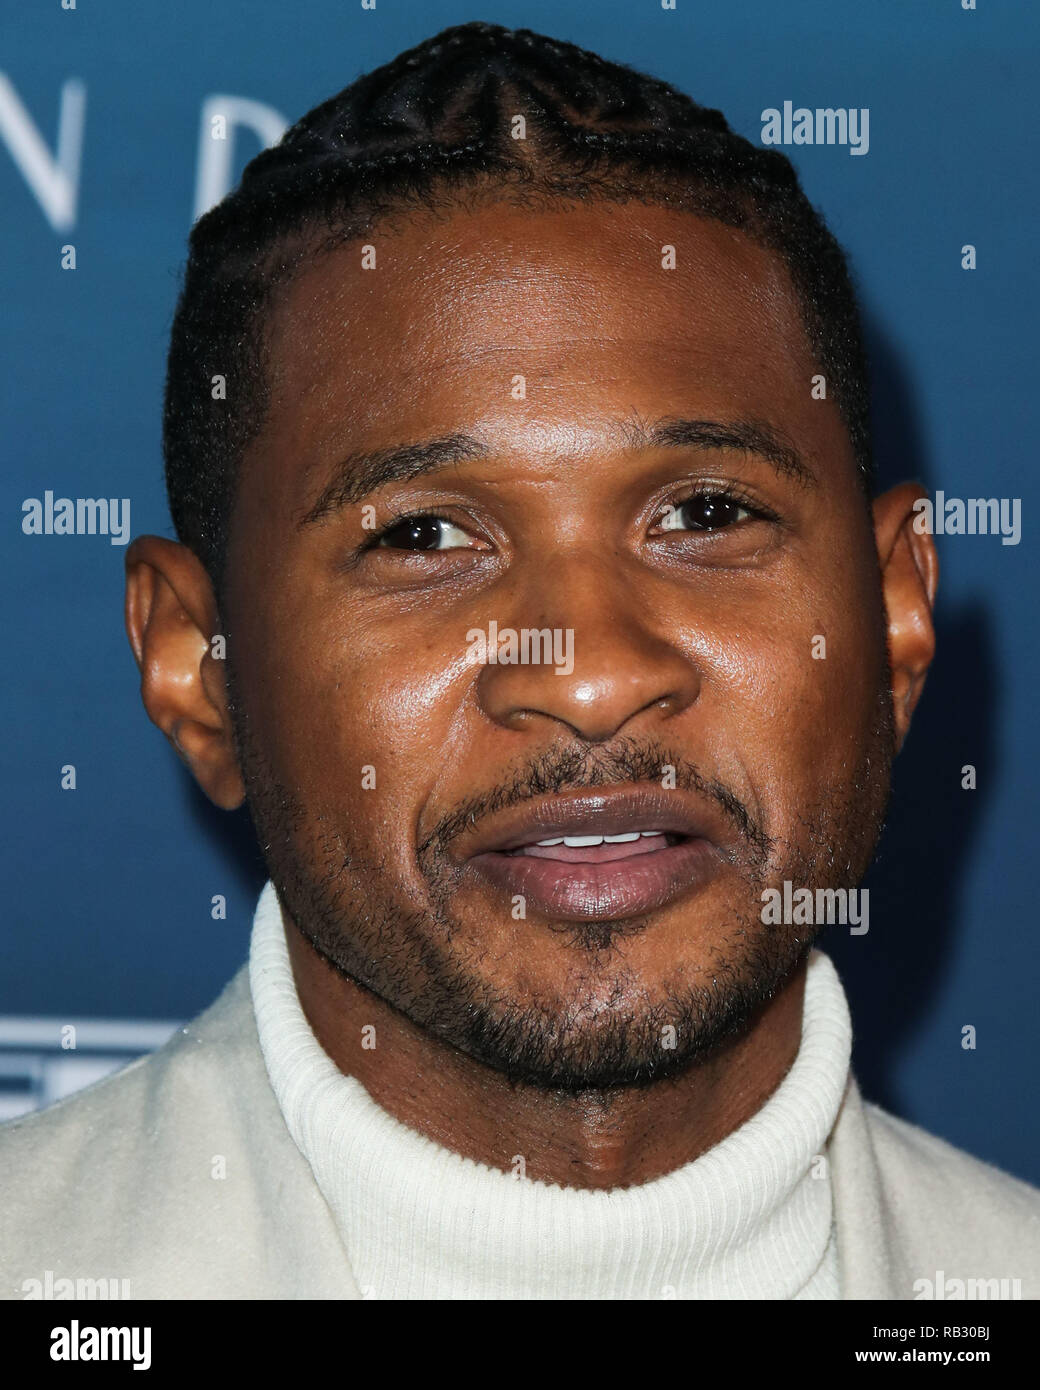 LOS ANGELES, USA - JANUARY 05: Singer Usher (Usher Raymond IV) arrives ...